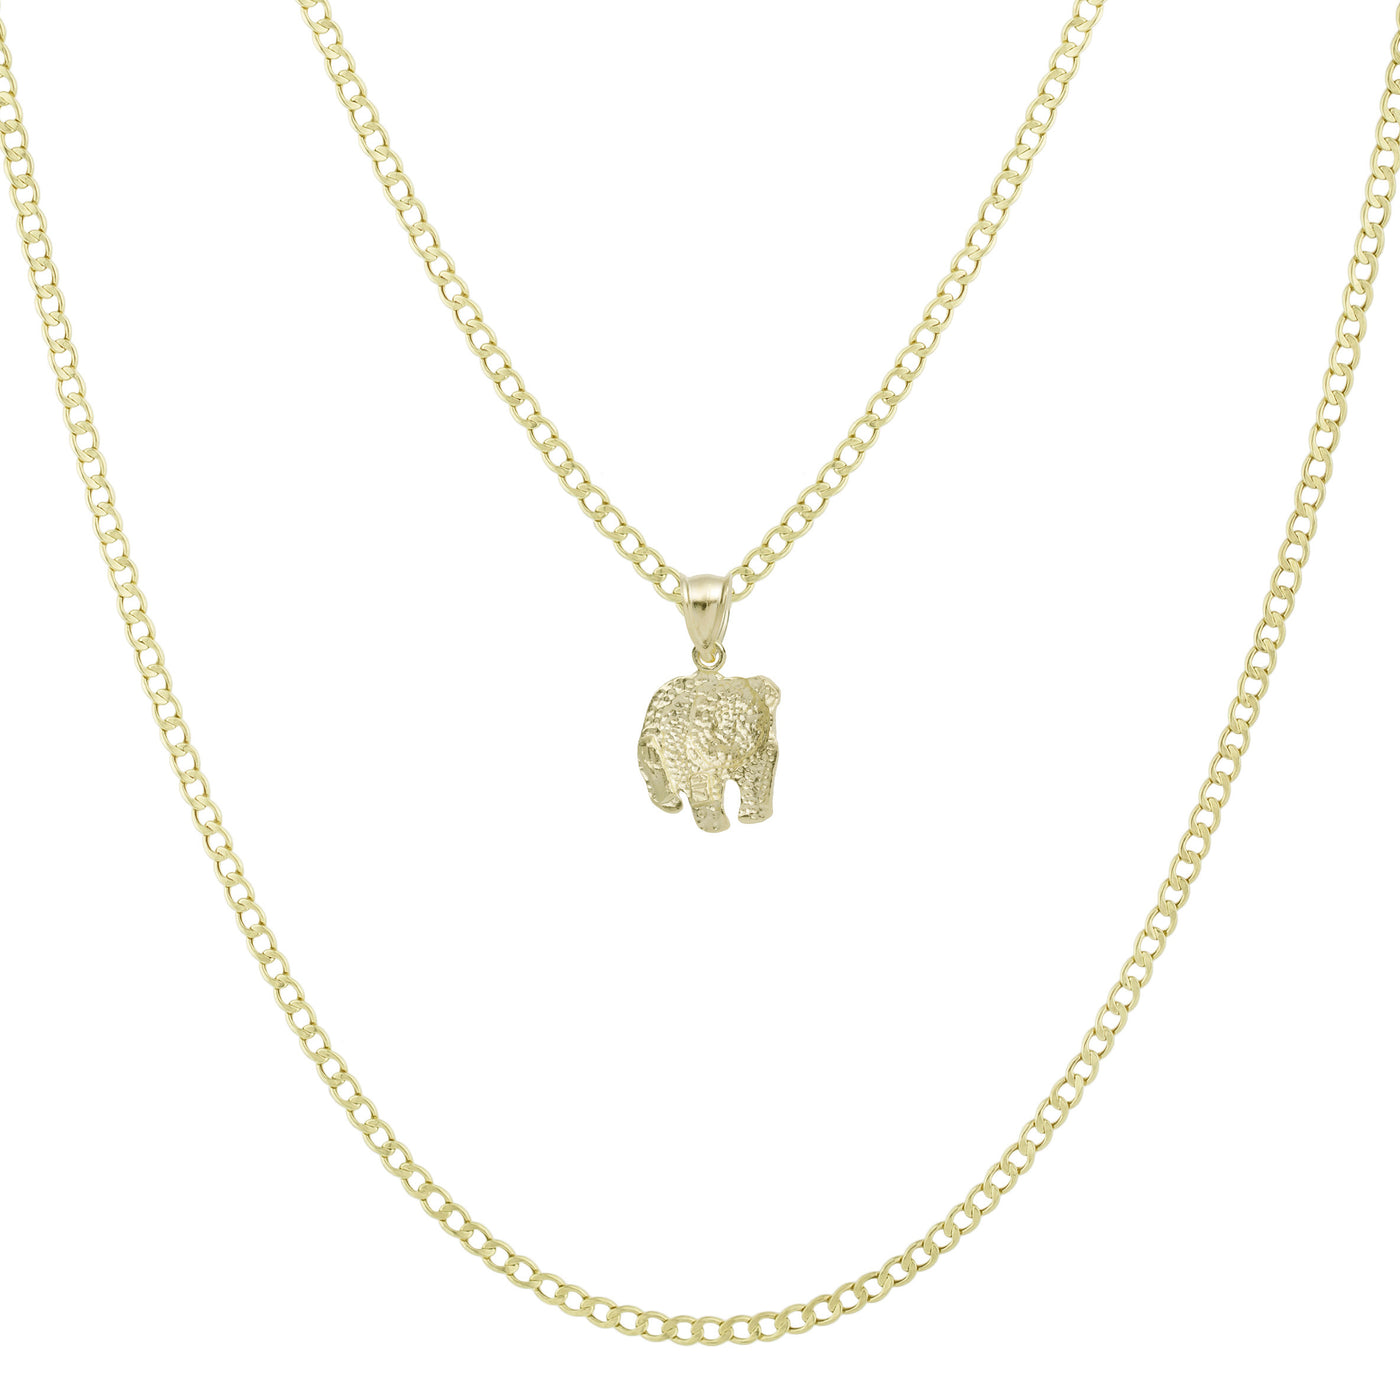 1" Diamond Cut Koala Pendant & Chain Necklace Set 10K Yellow Gold